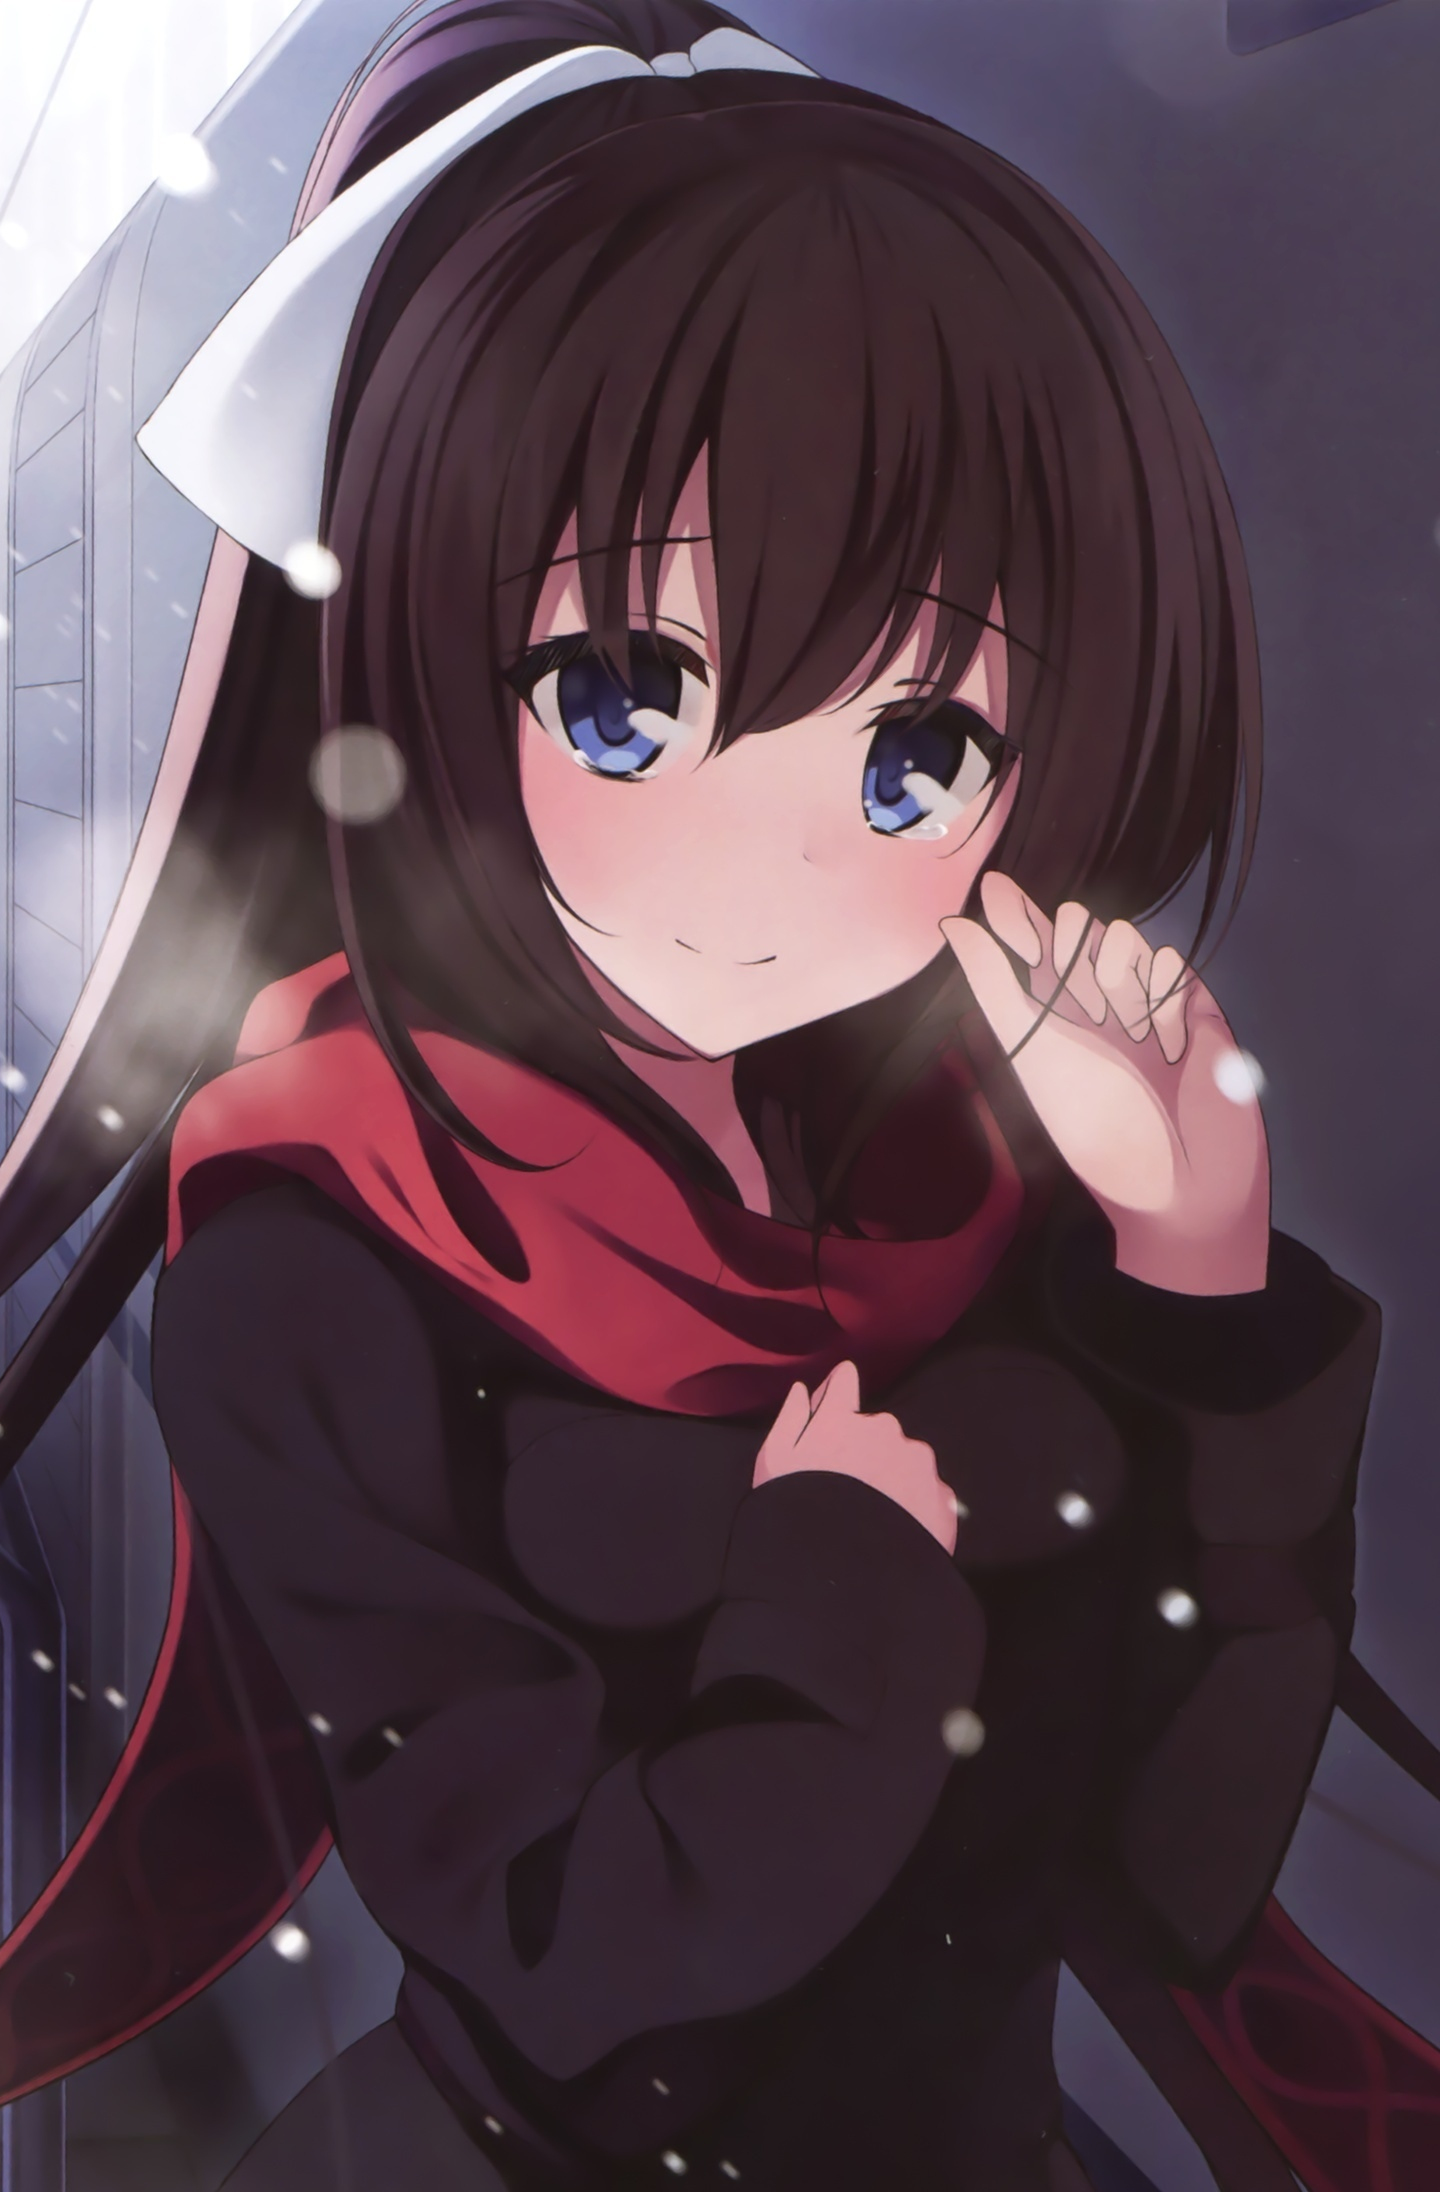 Download 1440x2960 Wallpaper Cute Blue Eyes Anime Girl Winter